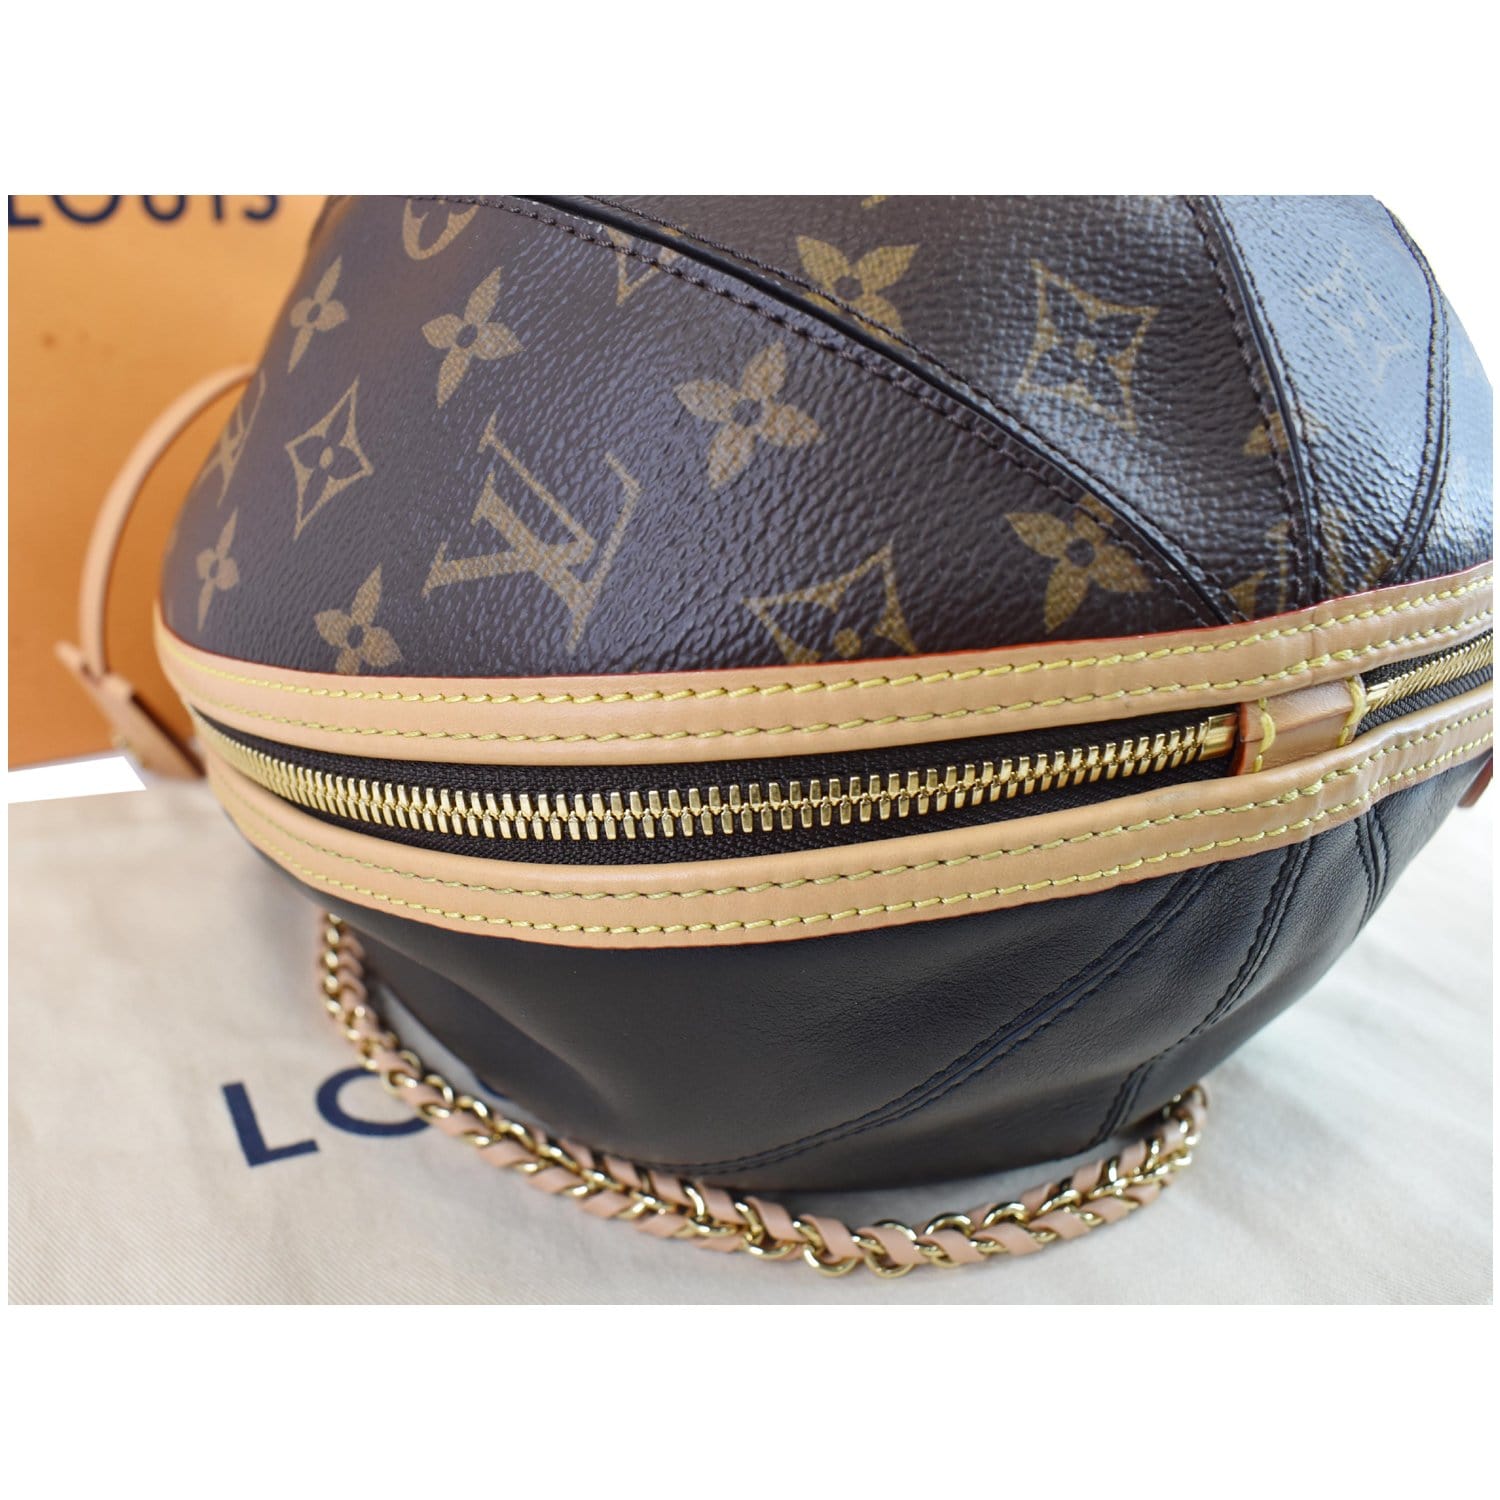 Louis Vuitton 2019 Monogram Egg Bag w/ Tags